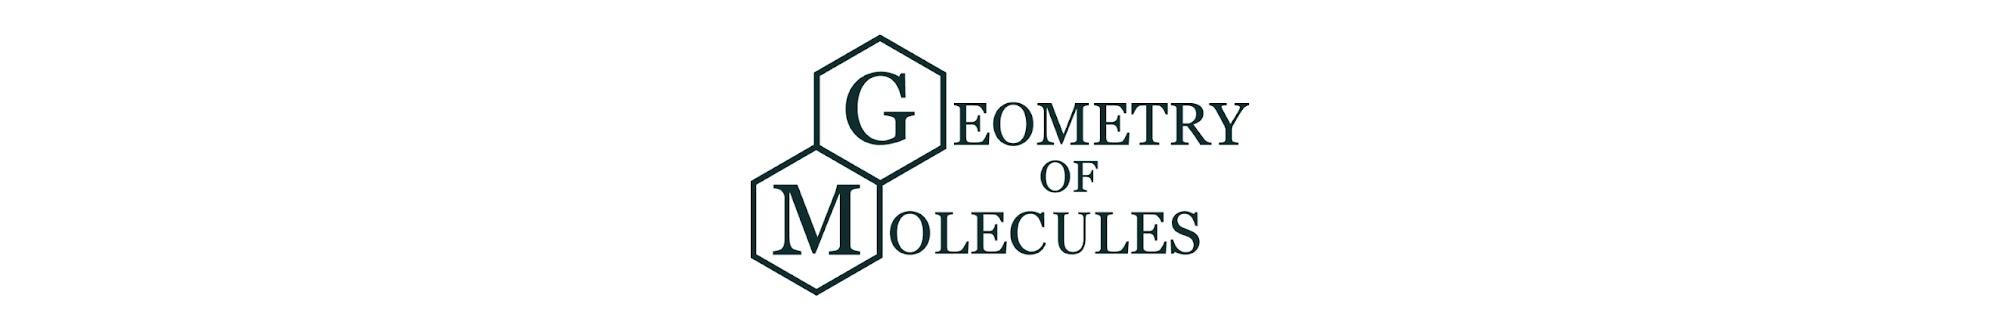 Geometry of Molecules